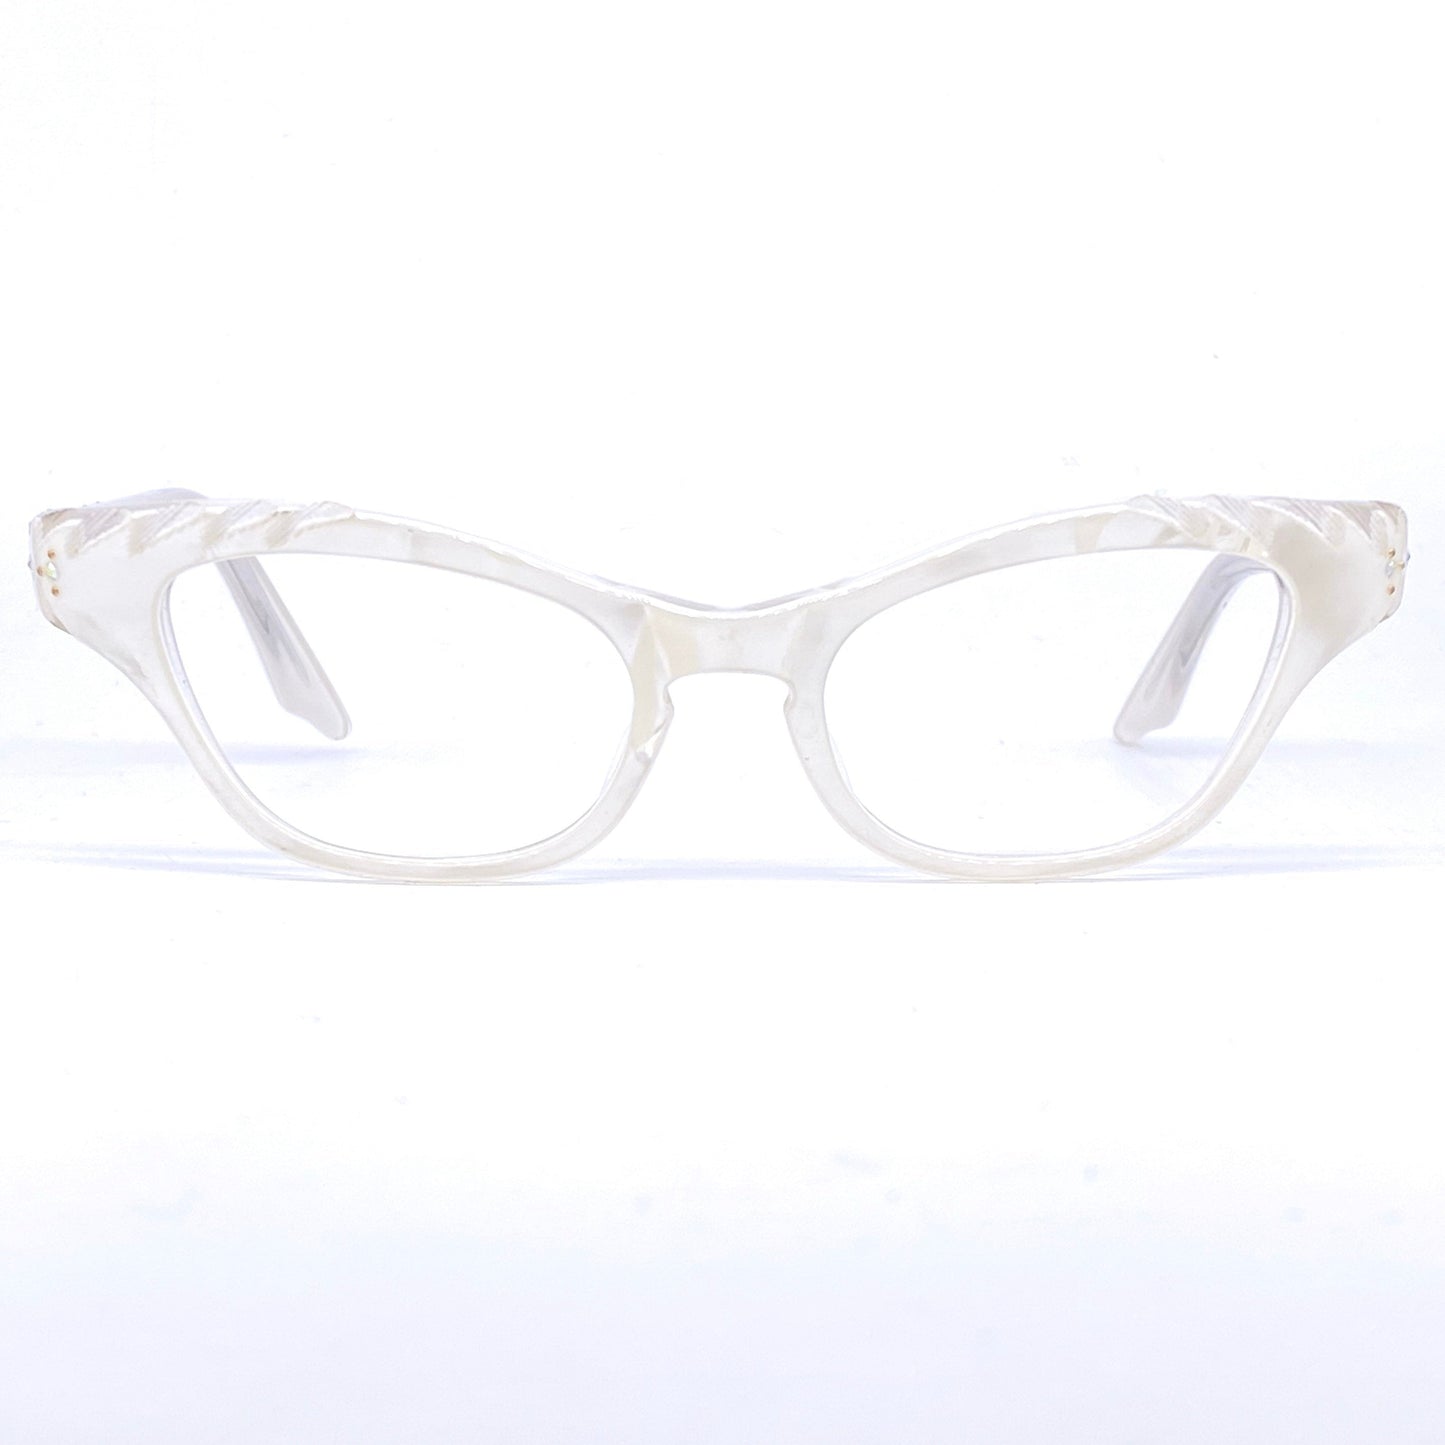 1950s pearl cateye eyeglasses frames by Swank France, 1950s NOS